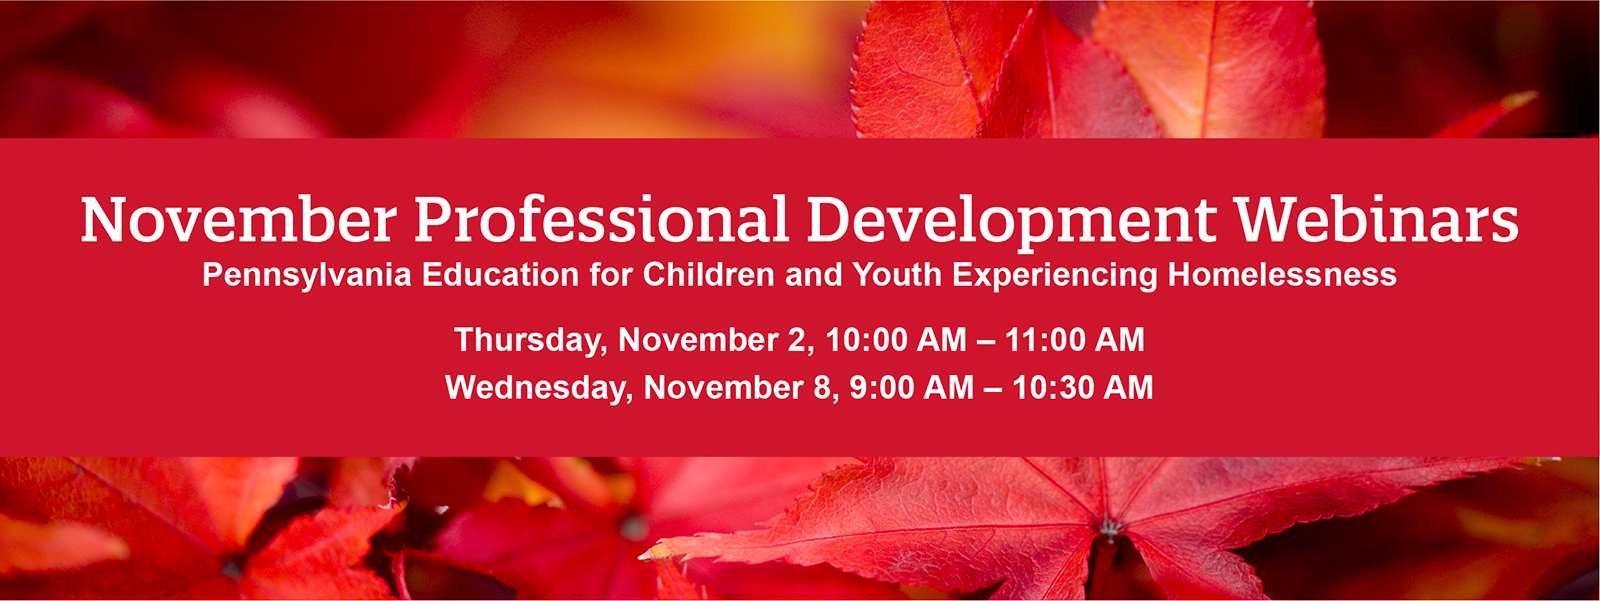 November Professional Development Workshops